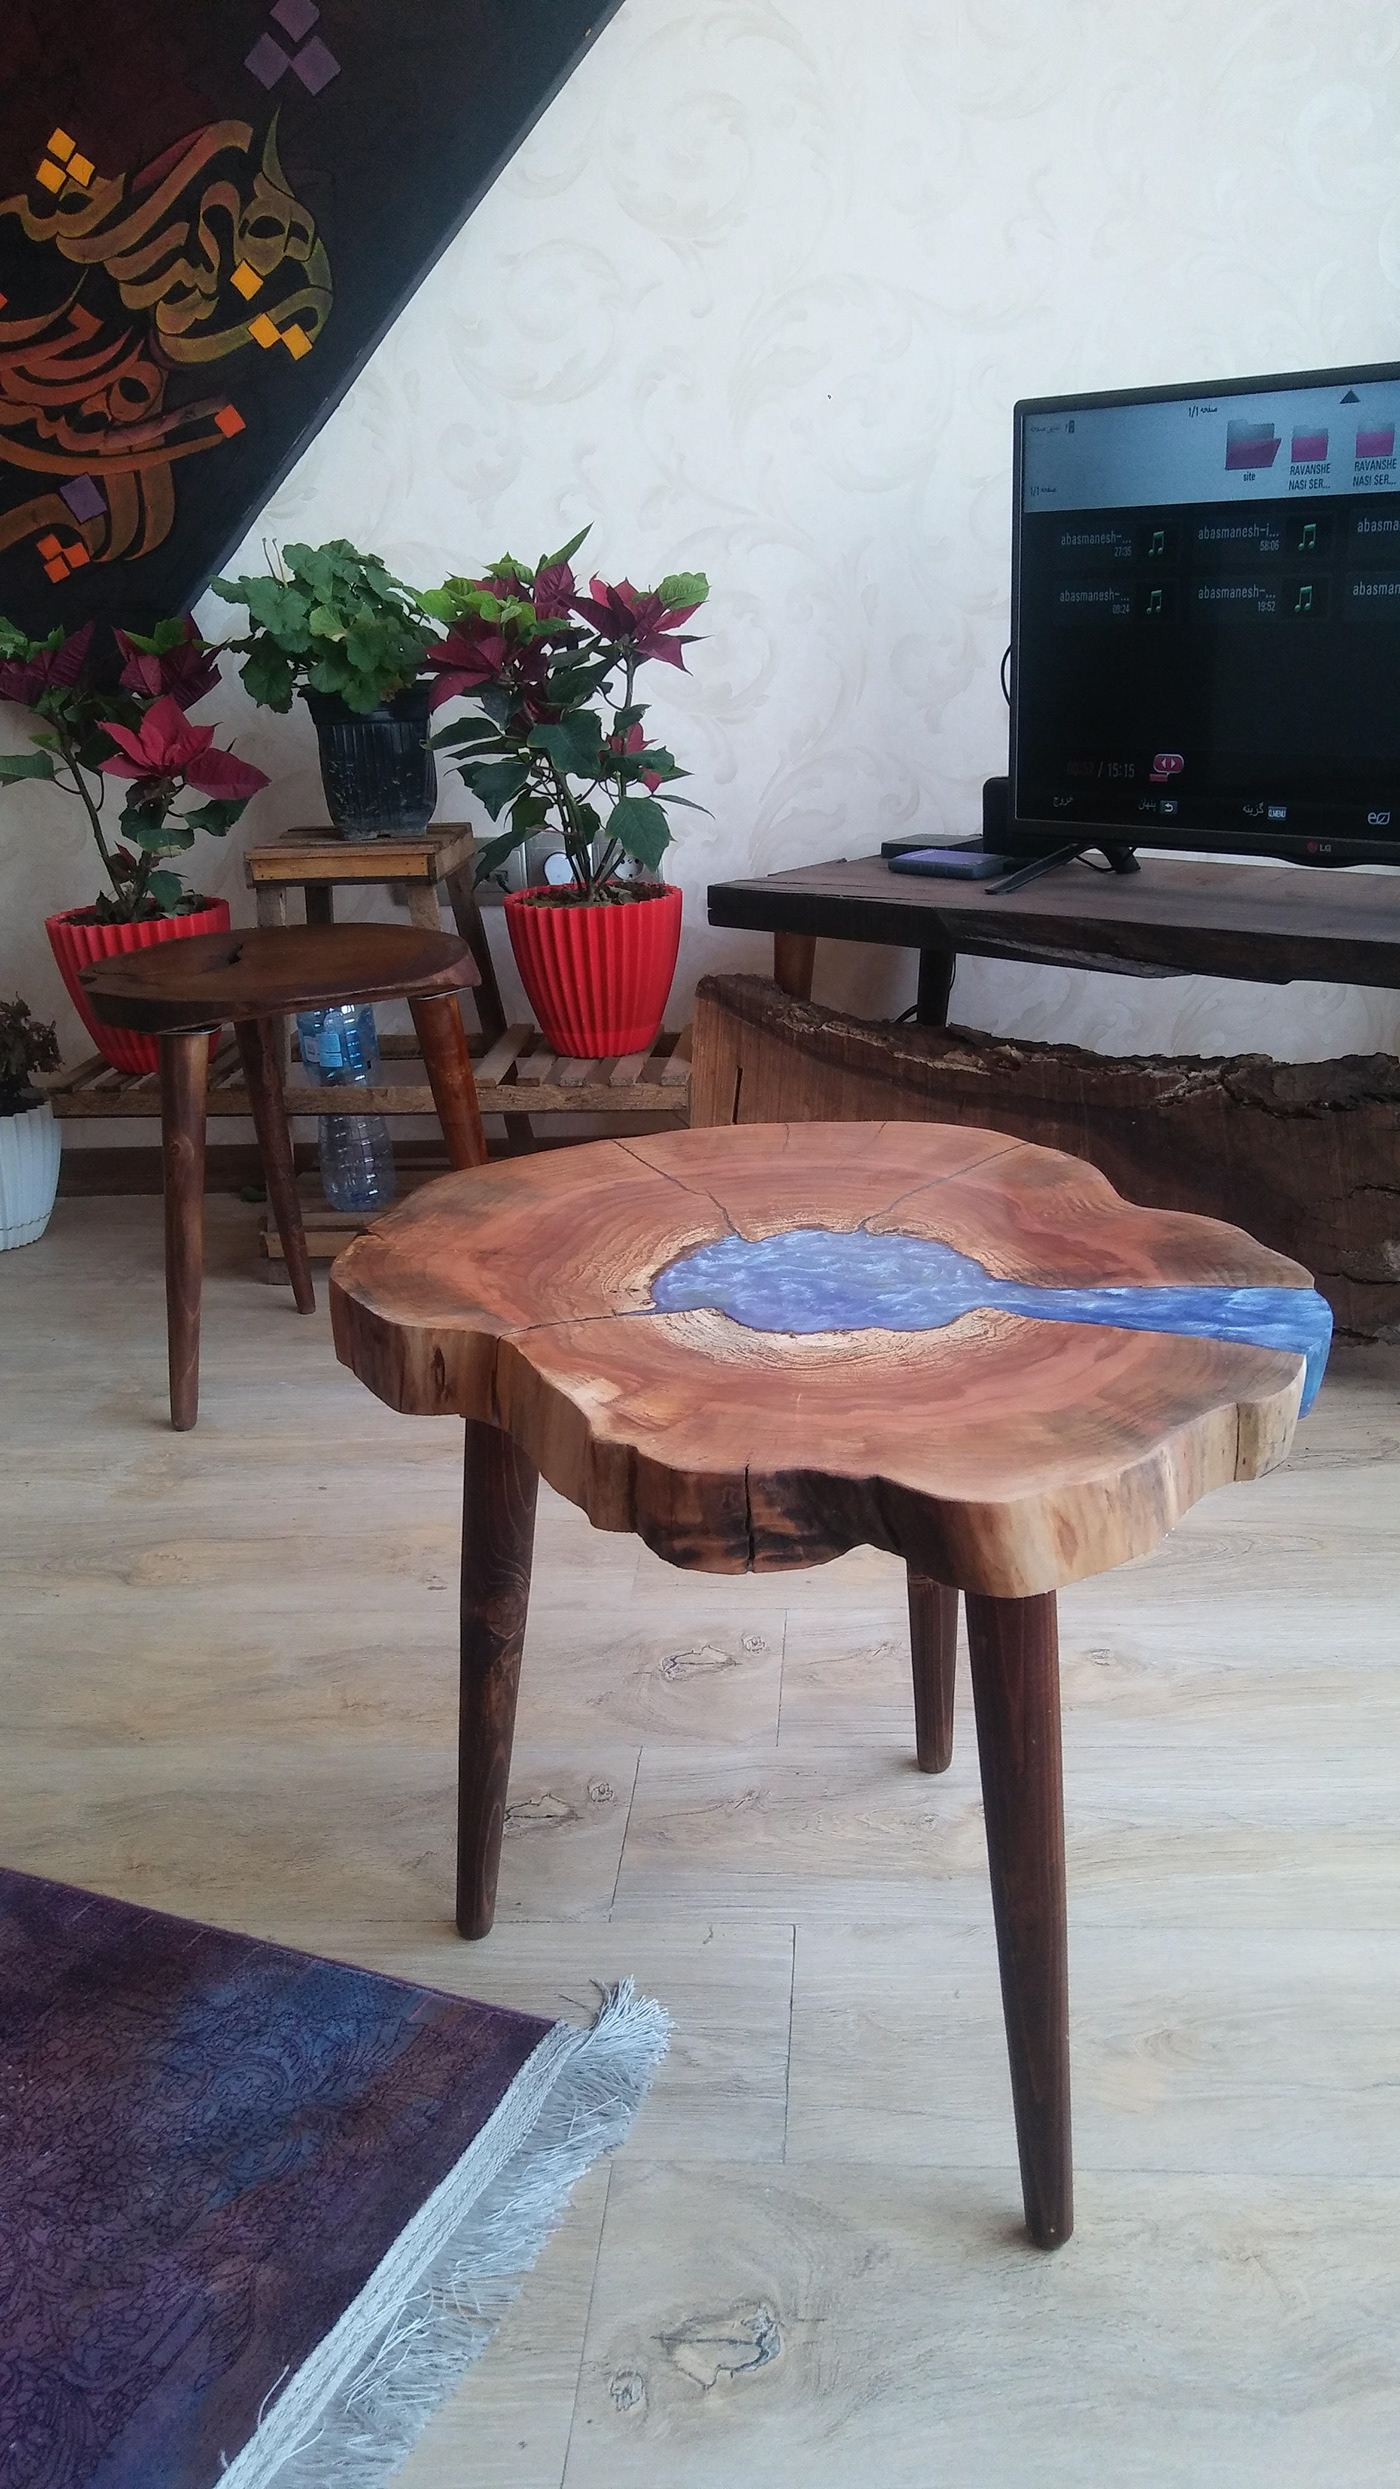 woodworking table woodwork Saeedarts interiordesign liveedge livewood minitable resinart woodart